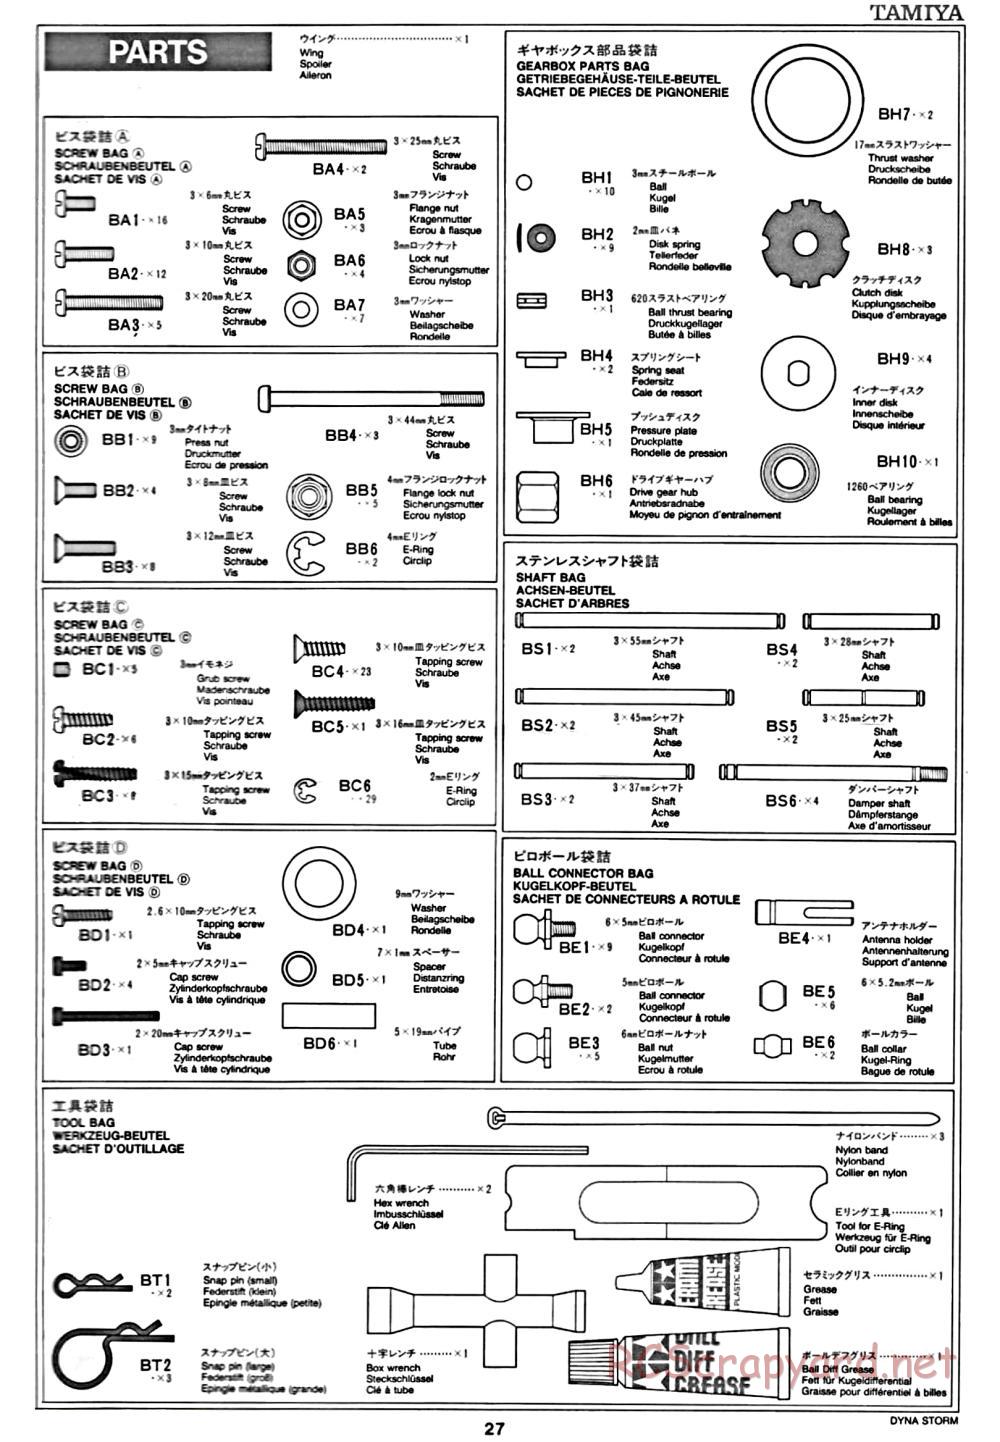 Tamiya - Dyna Storm Chassis - Manual - Page 27